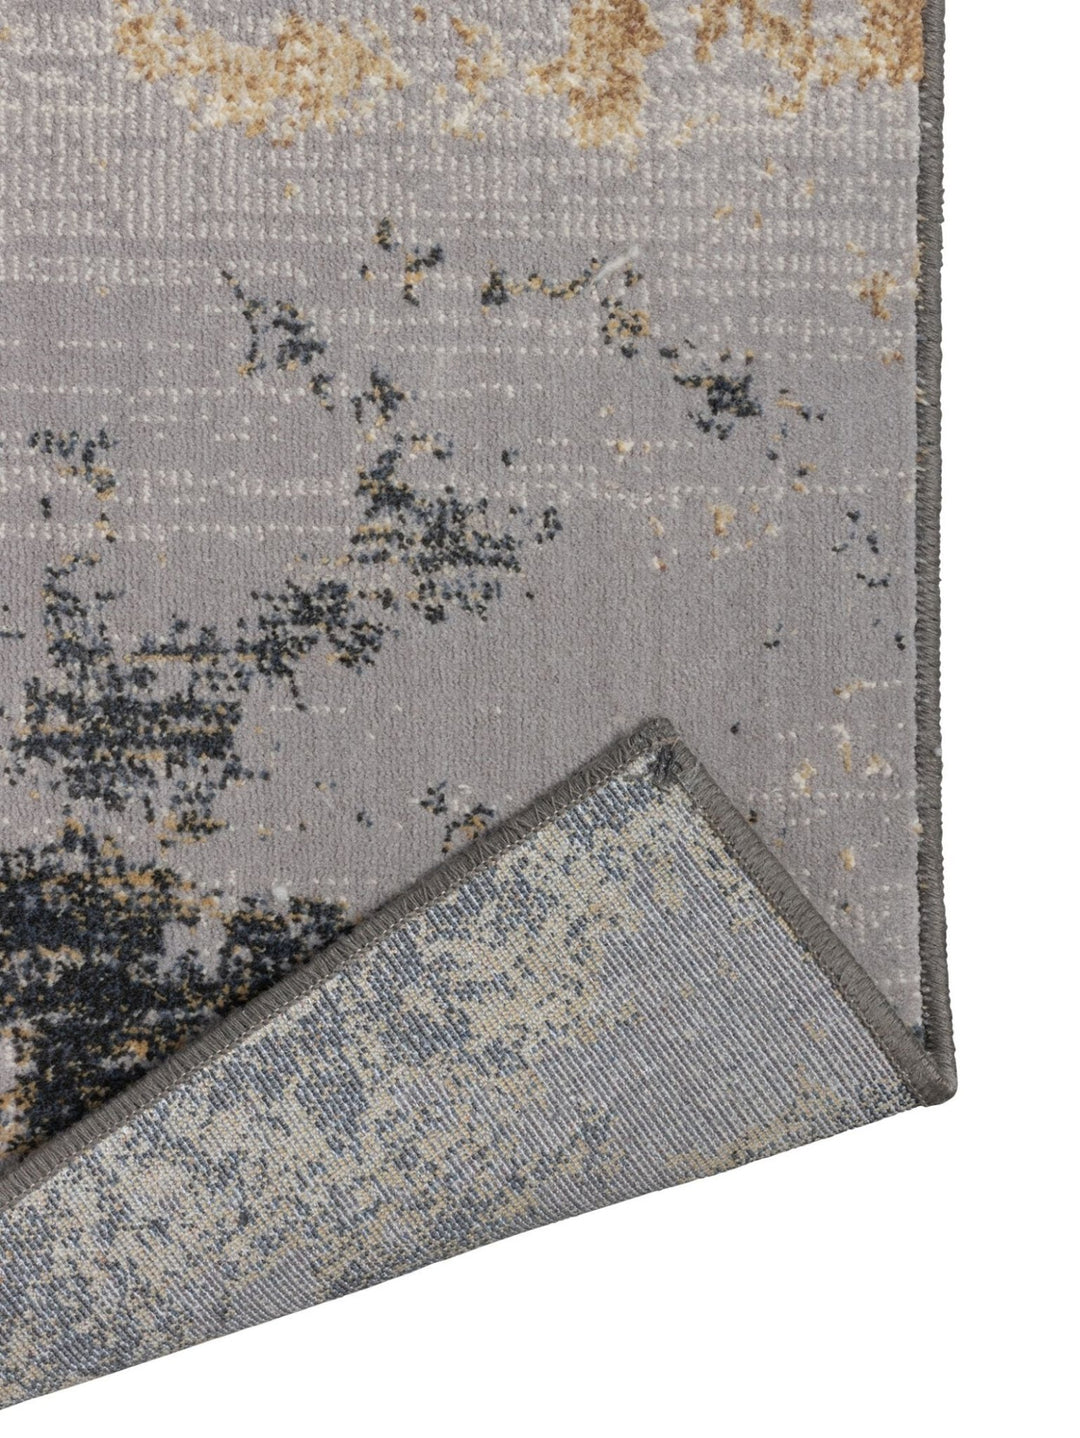 Gilded Rug in Salted Caramel - indoor rug- Hertex Haus Online - Abstract